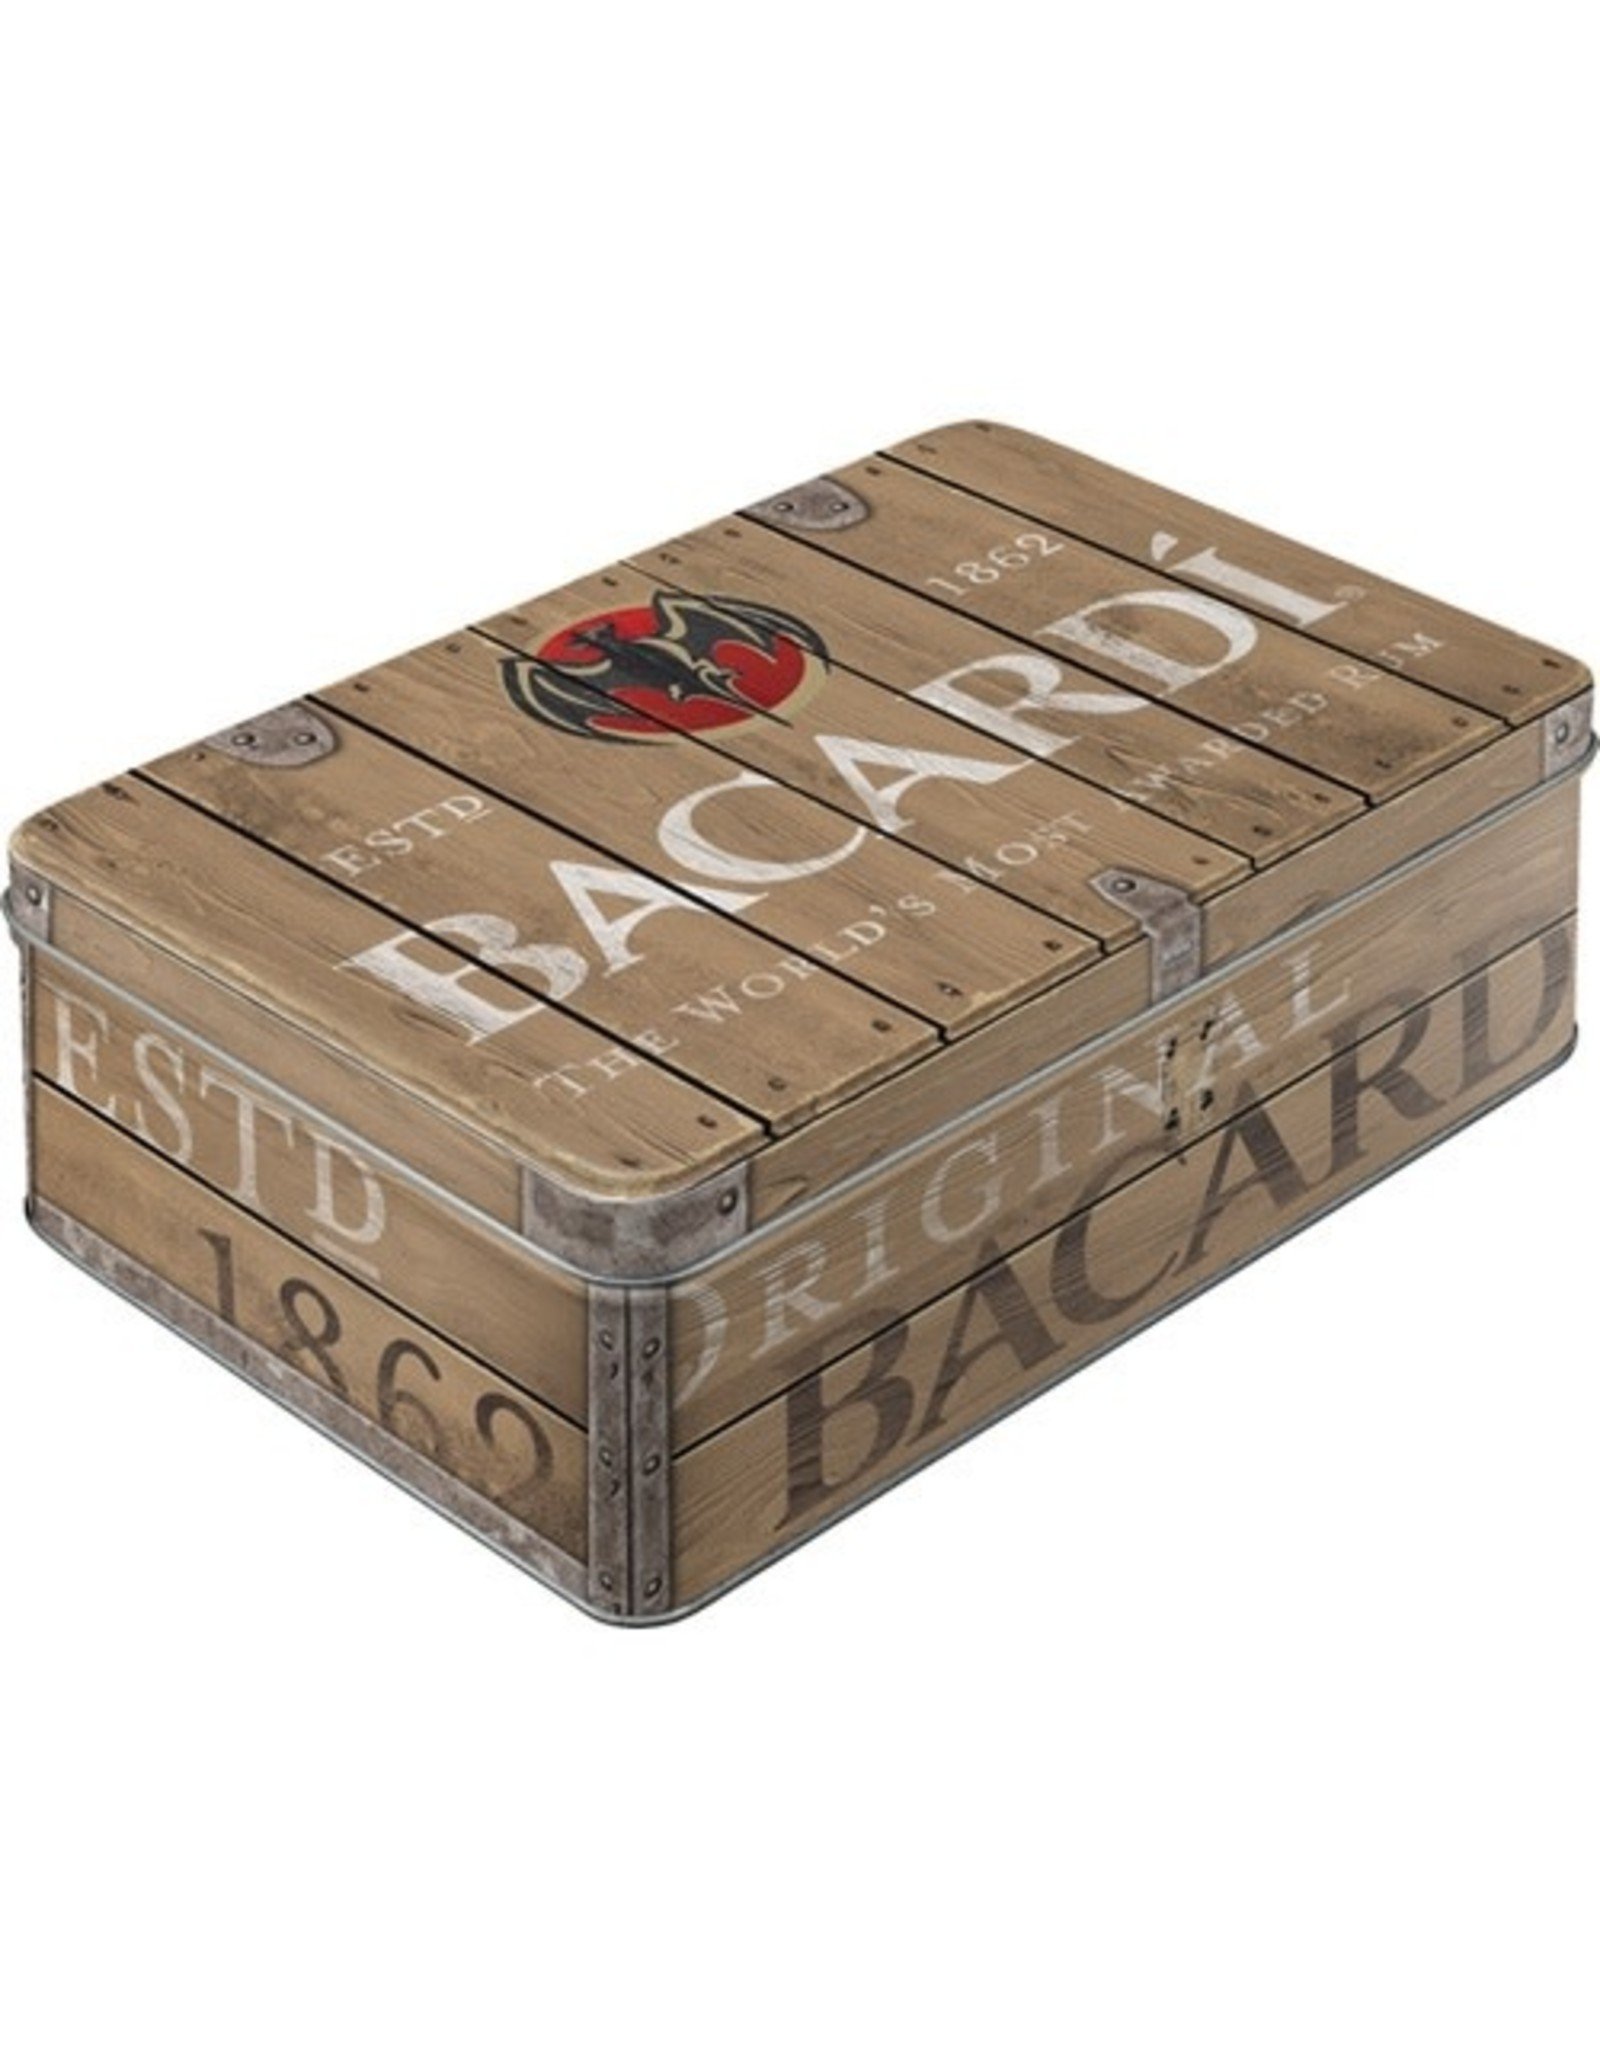 Nostalgic Art platte blikken doos met opschrift "Bacardi"